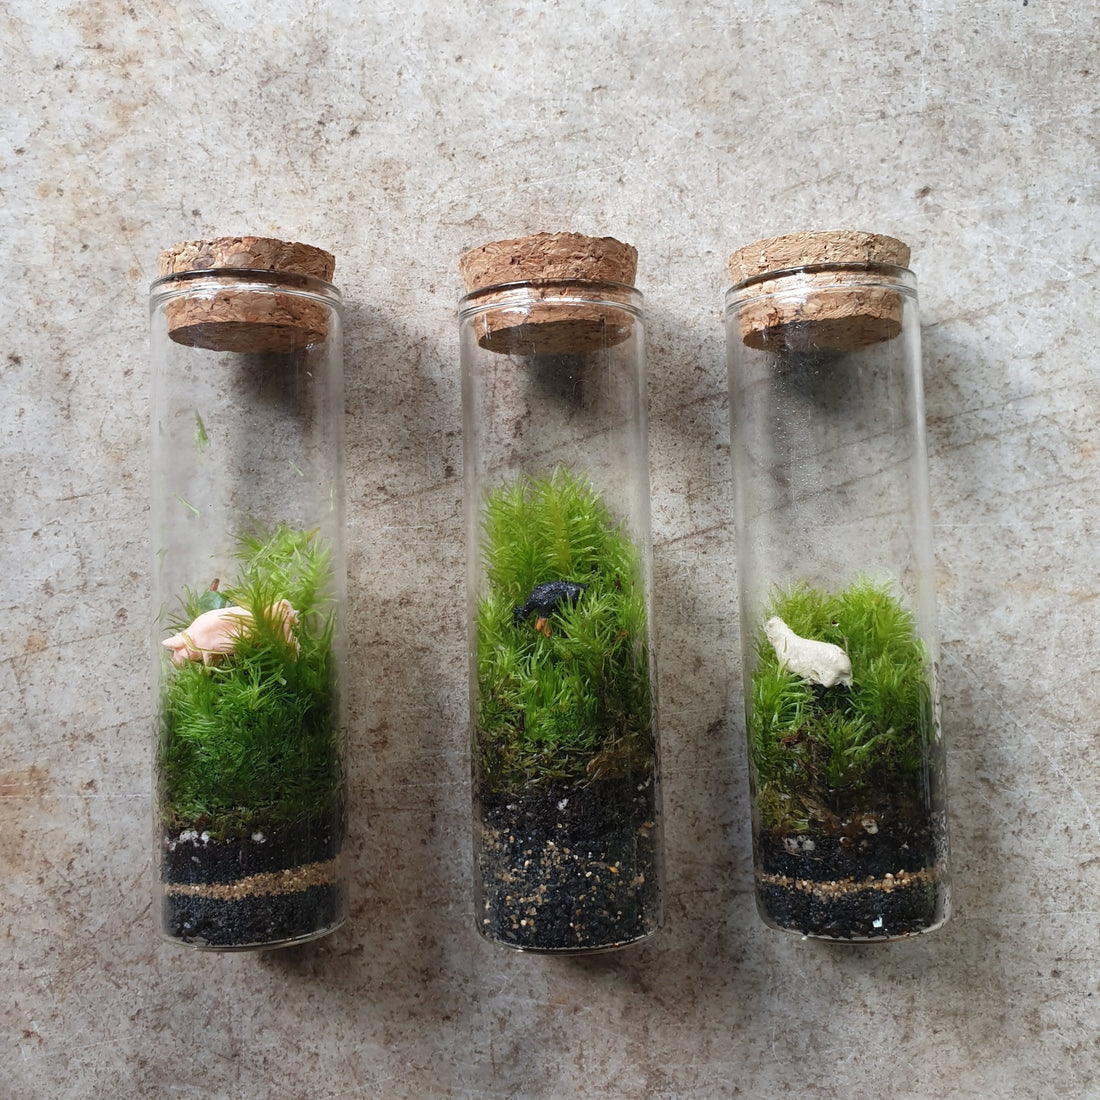 Test tube moss terrarium- 2 types available